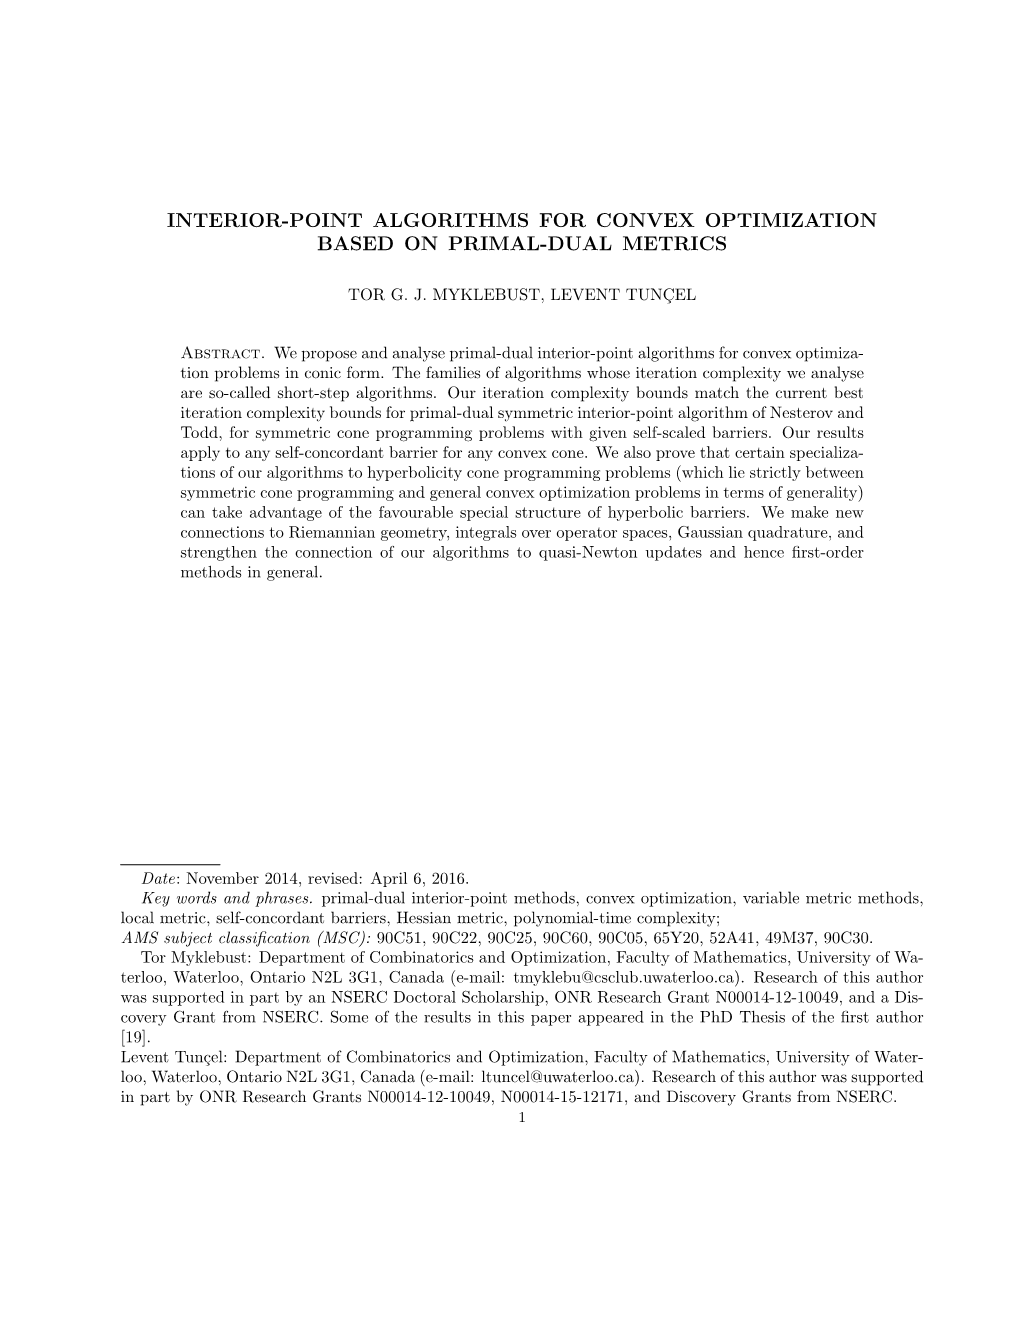 Interior-Point Algorithms for Convex Optimization Based on Primal-Dual Metrics